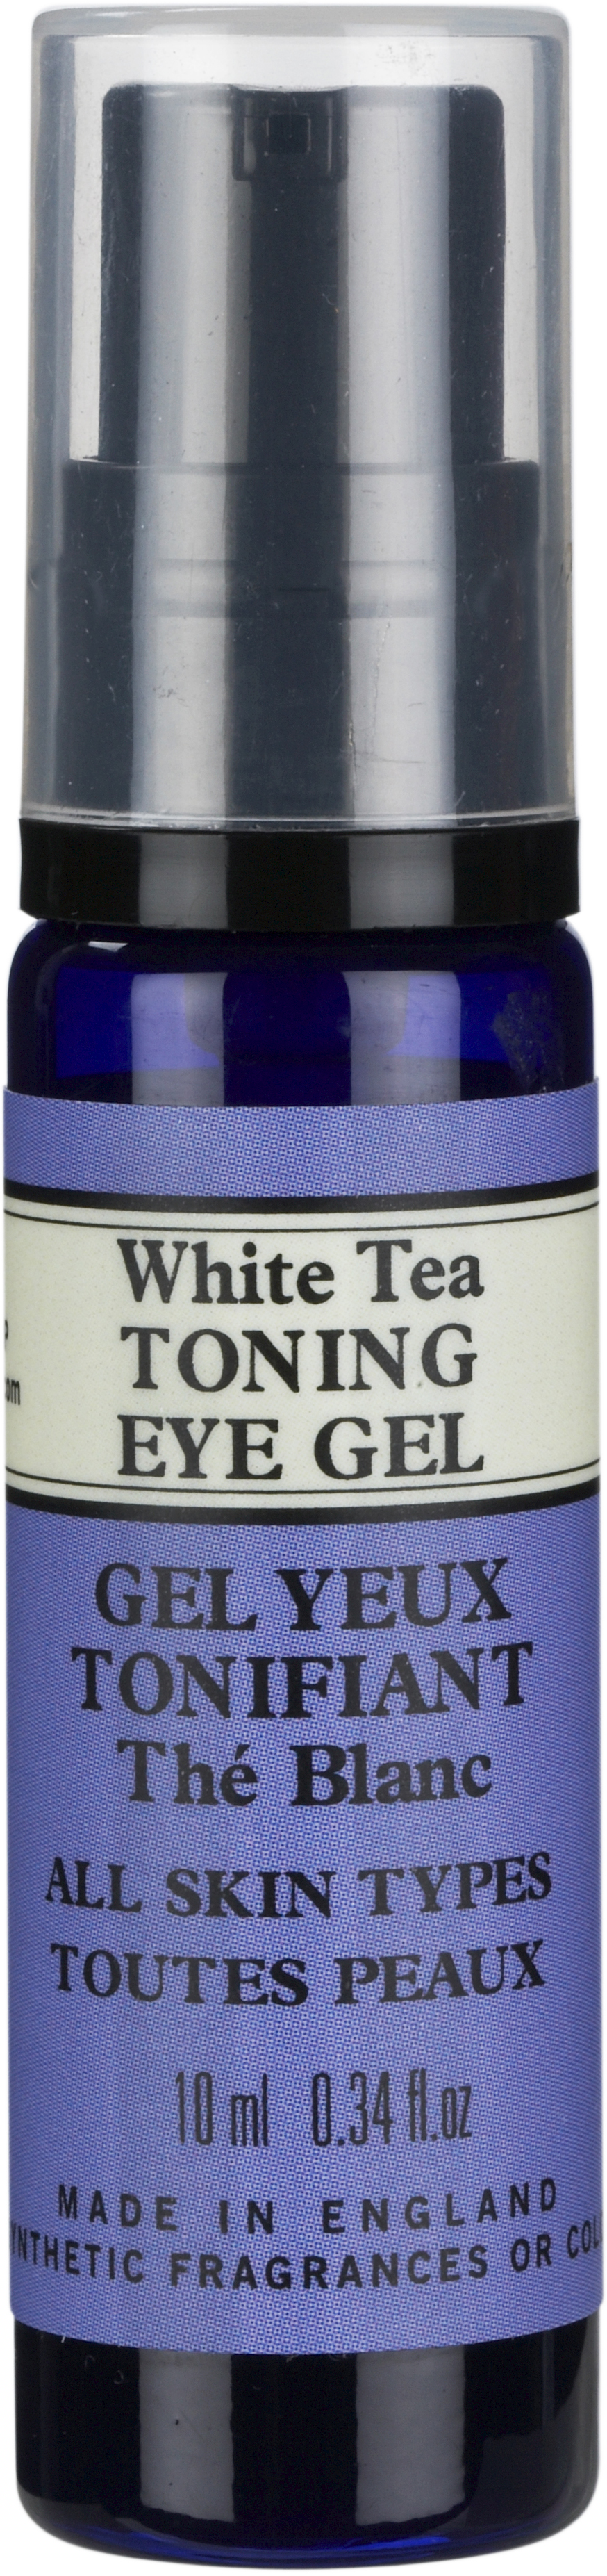 Neal’s Yard Remedies White Tea Eye Gel